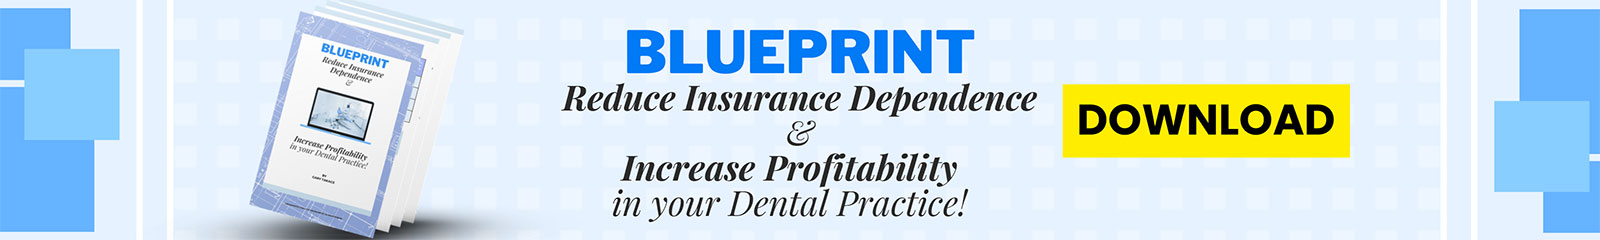 Reduce Insurance Blueprint